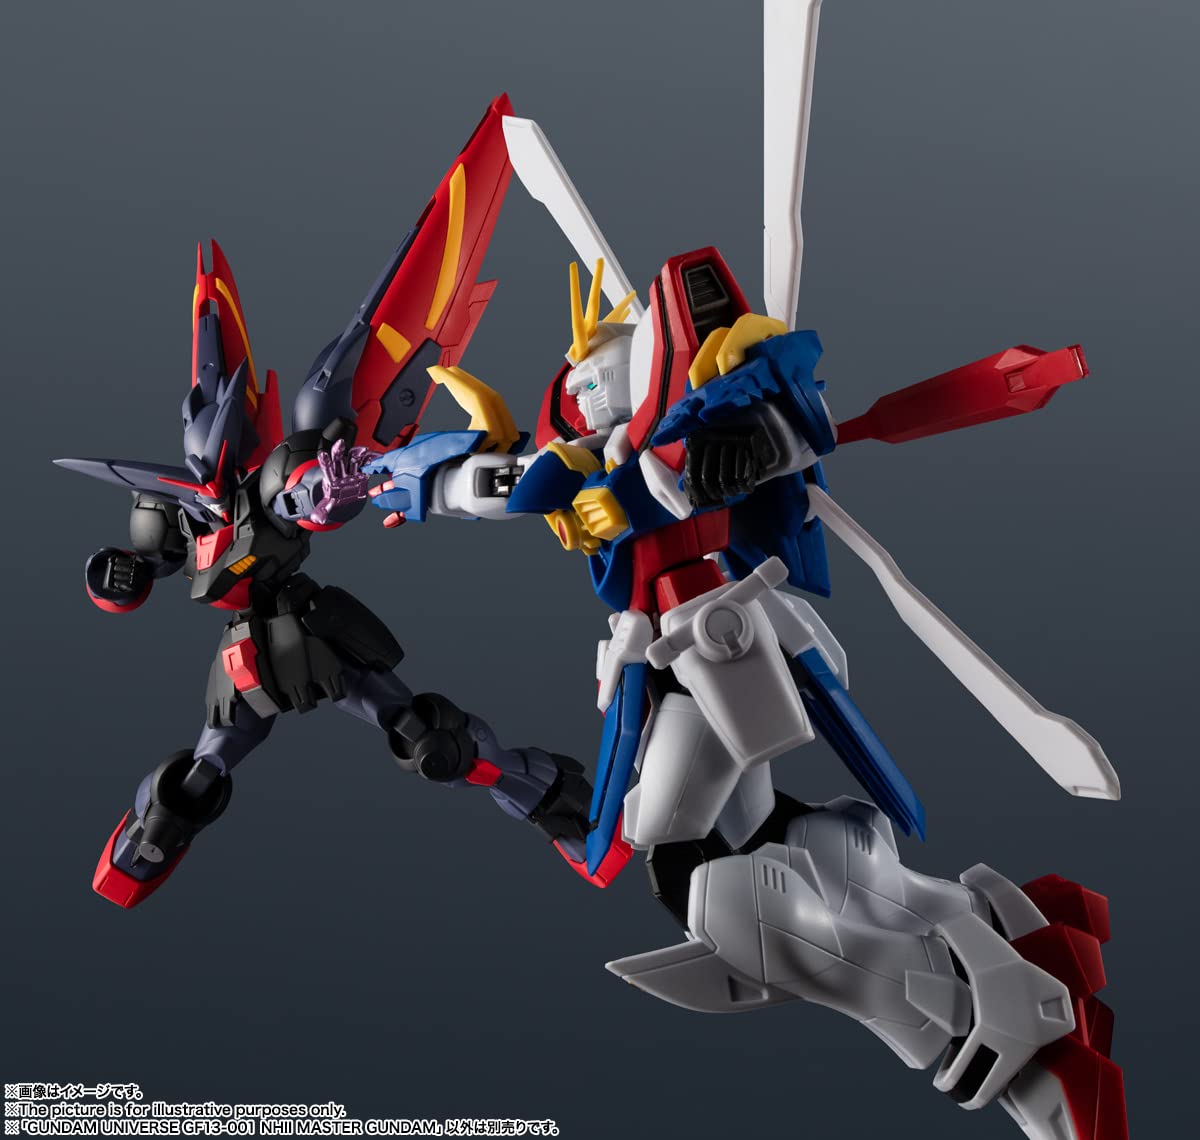 TAMASHII NATIONS - Mobile Fighter G Gundam - GF13-001 NHII Master Gundam, Bandai Spirits Gundam Universe Action Figure